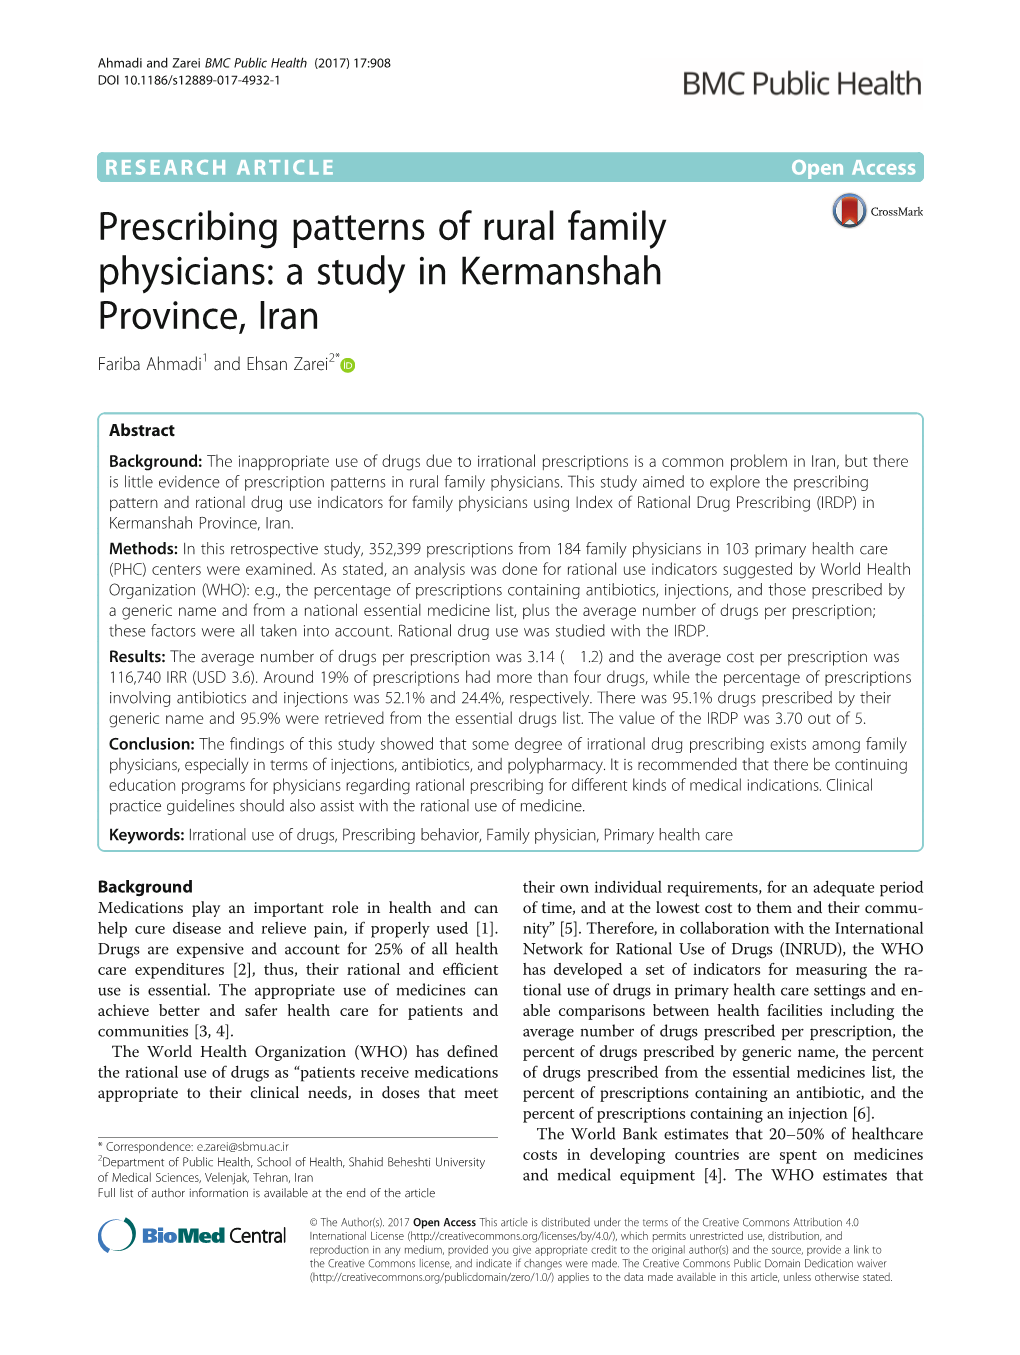 Prescribing Patterns of Rural Family Physicians: a Study in Kermanshah Province, Iran Fariba Ahmadi1 and Ehsan Zarei2*